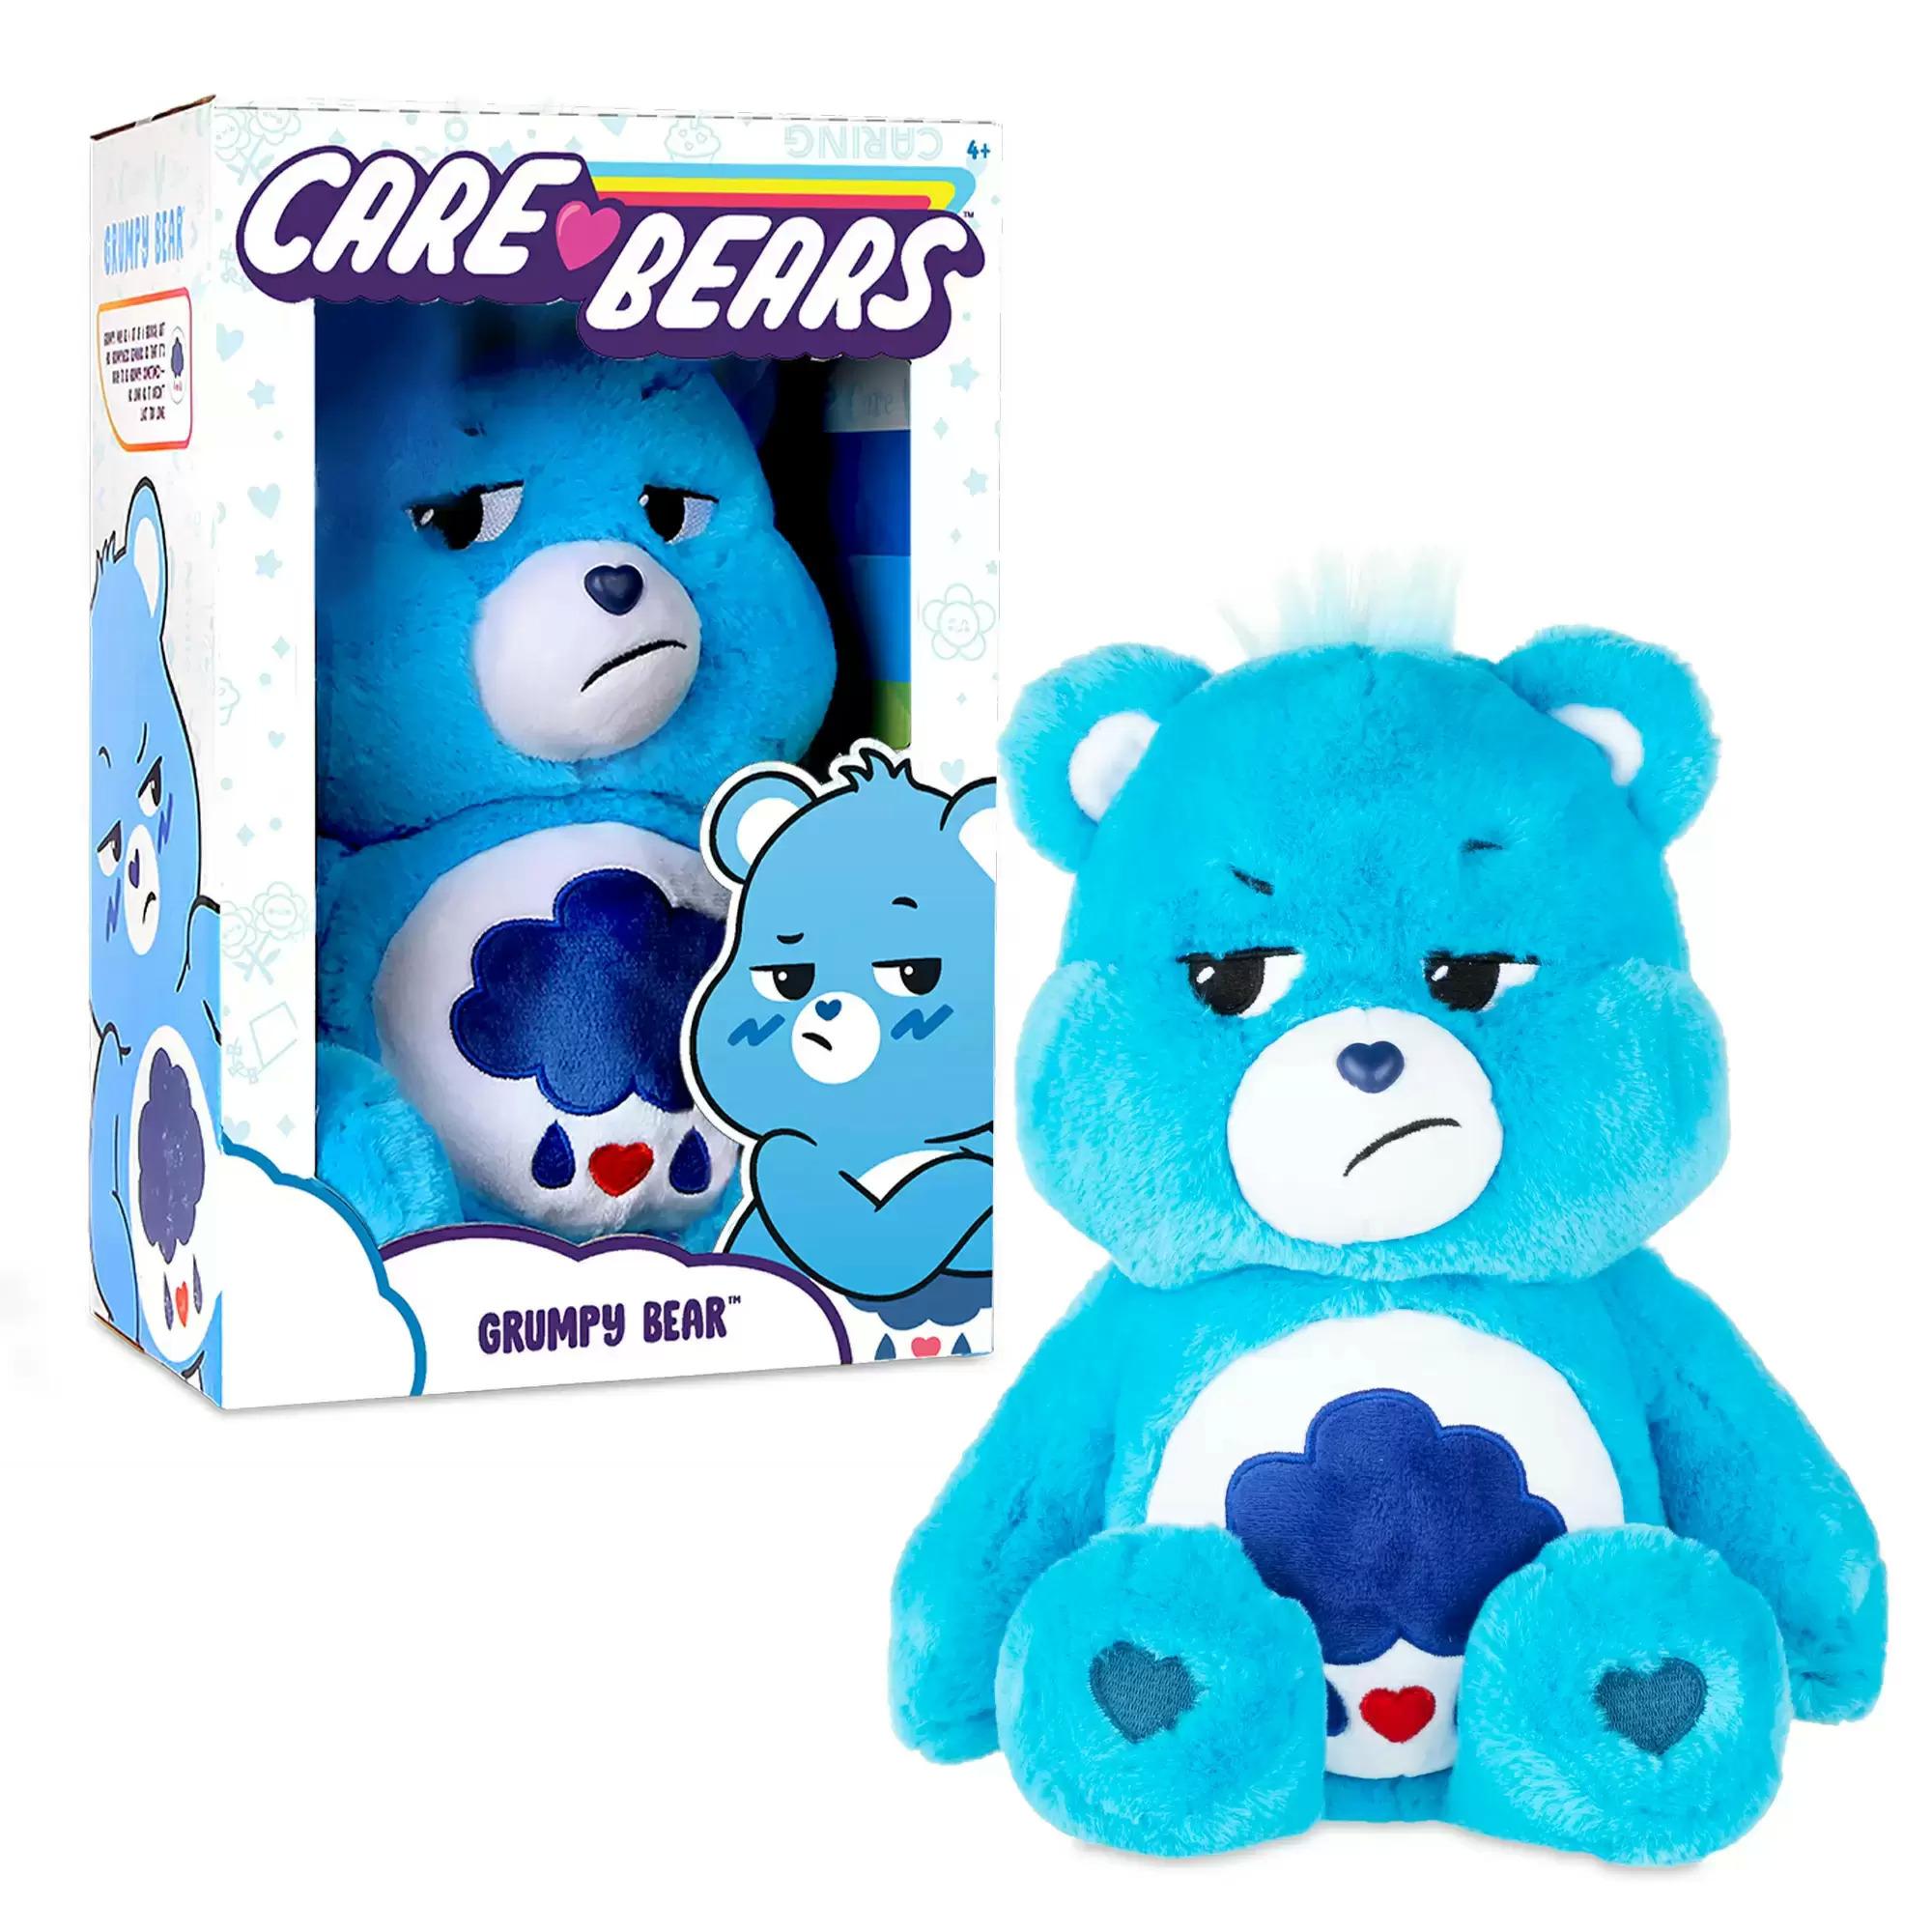 14in Care Bears Plush Grumpy Bear for $6.64